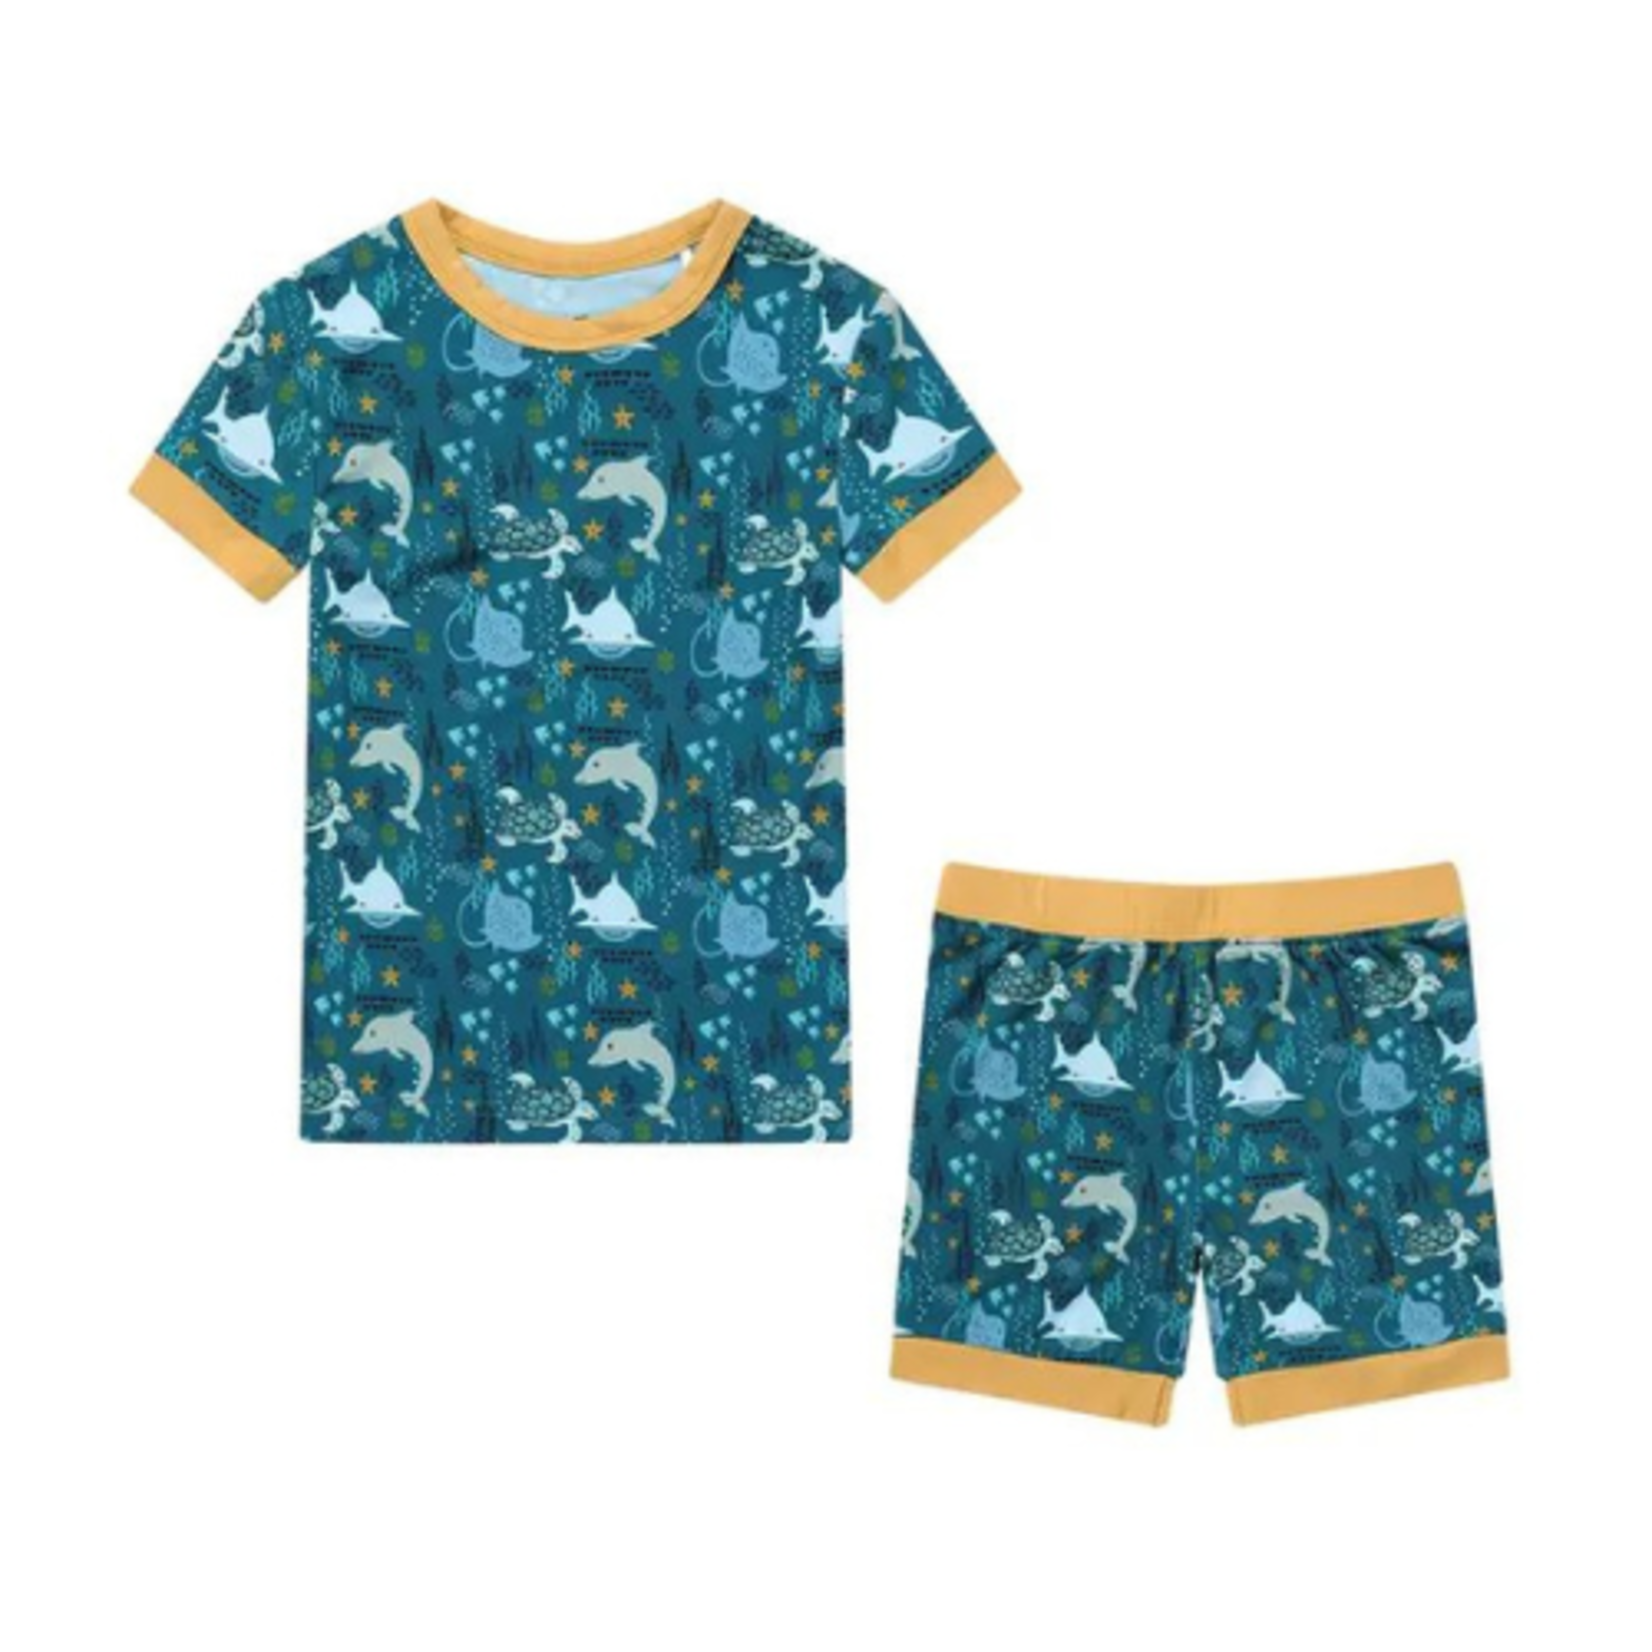 Emerson and Friends Ocean Friends Bamboo Short Sleeve Shorts Kids Pajamas Set